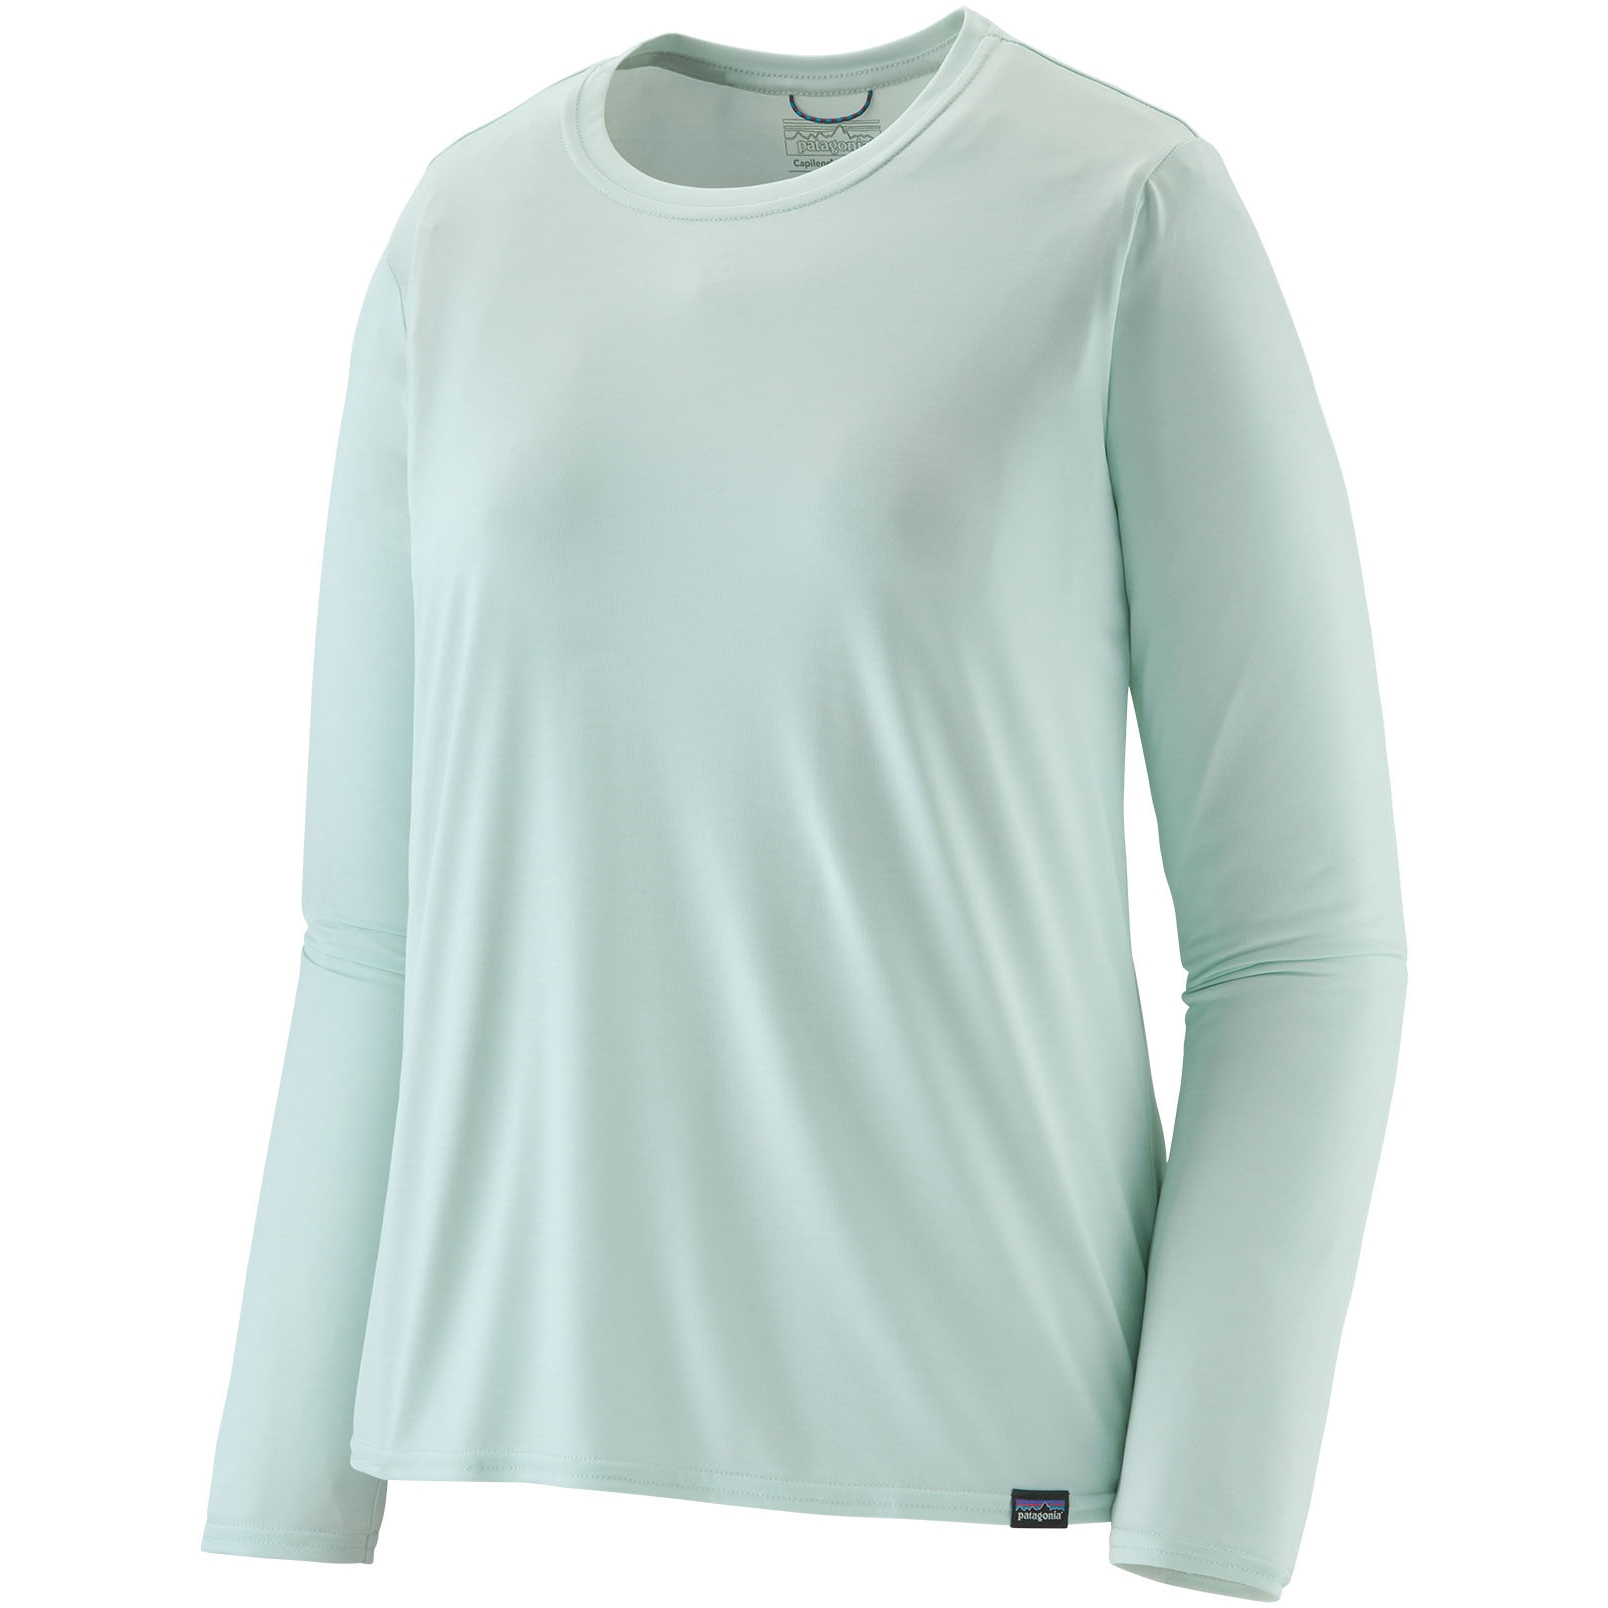 Productfoto van Patagonia Capilene Cool Daily Shirt met Lange Mouwen Dames - Wispy Green - Light Wispy Green X-Dye